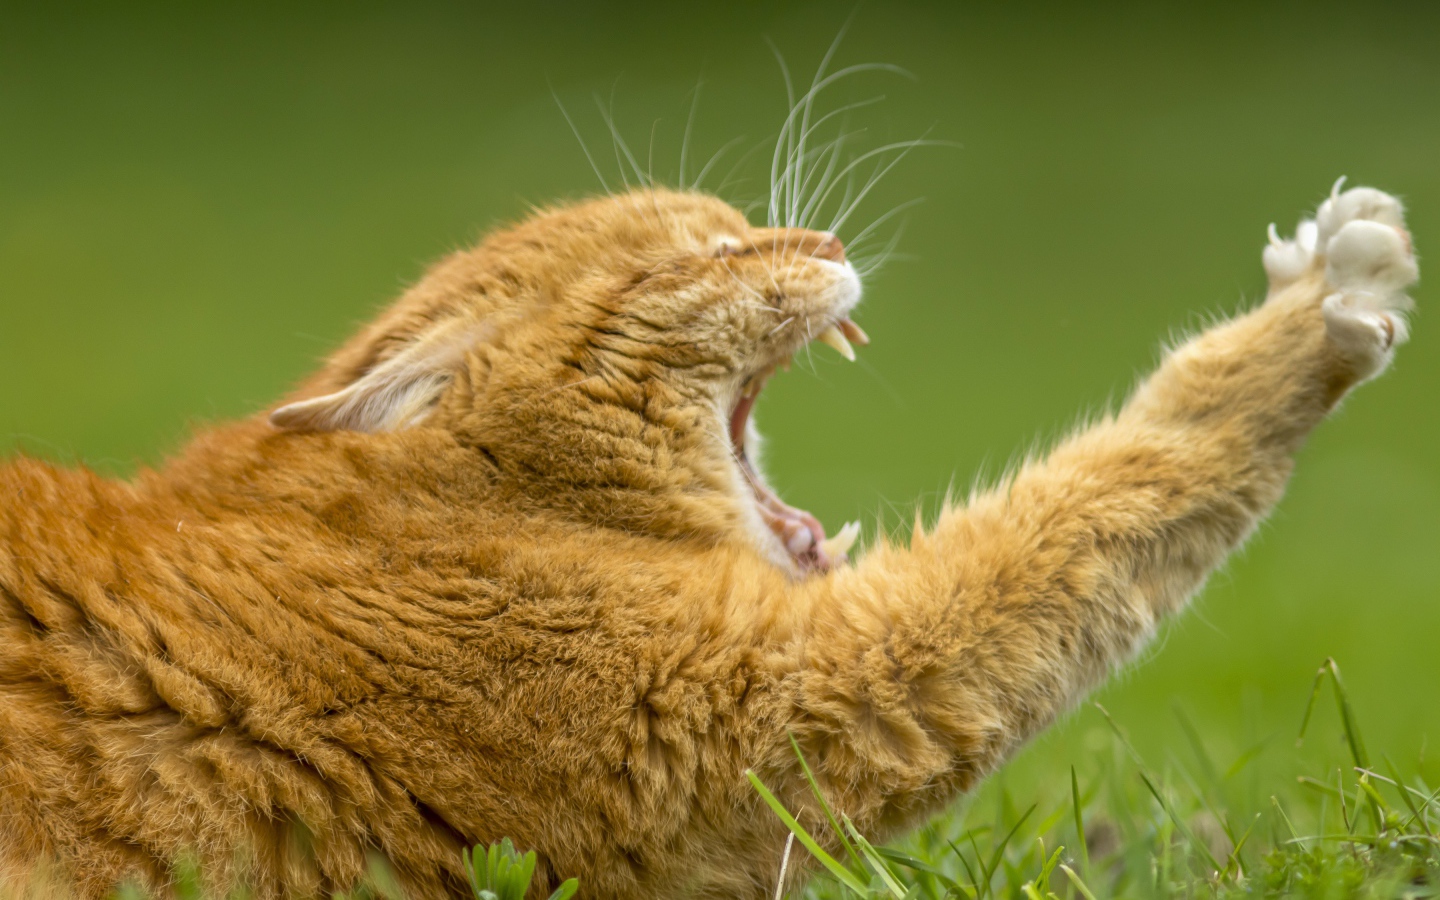 Redhead yawning cat on green grass